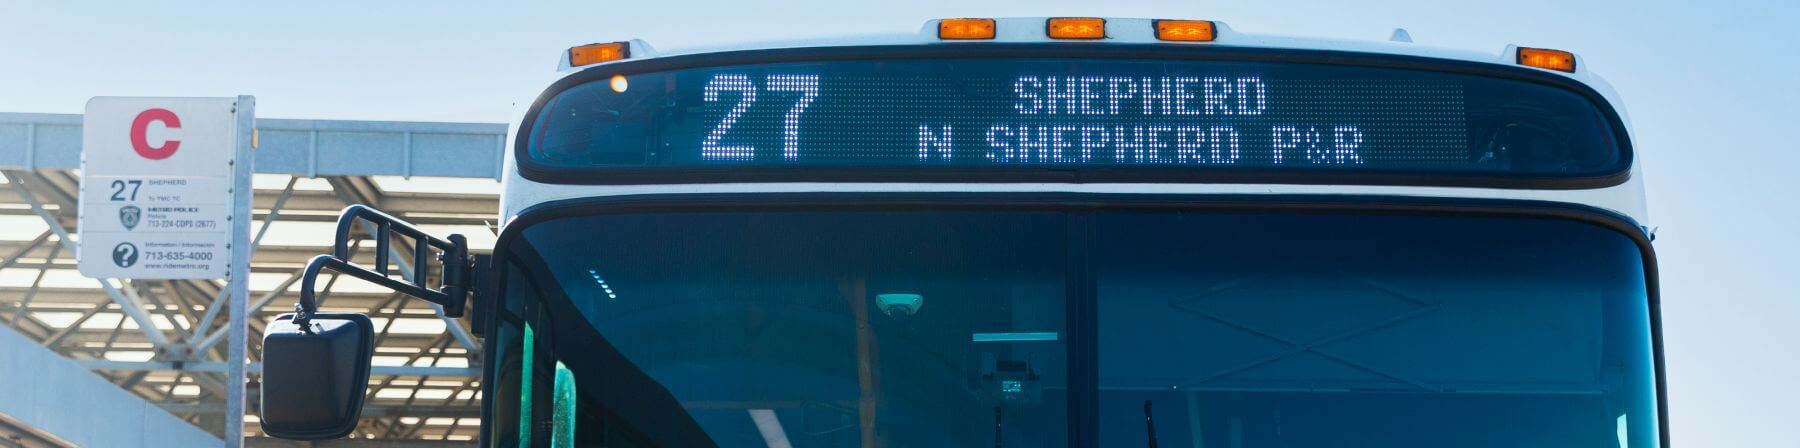 27 Shepherd bus